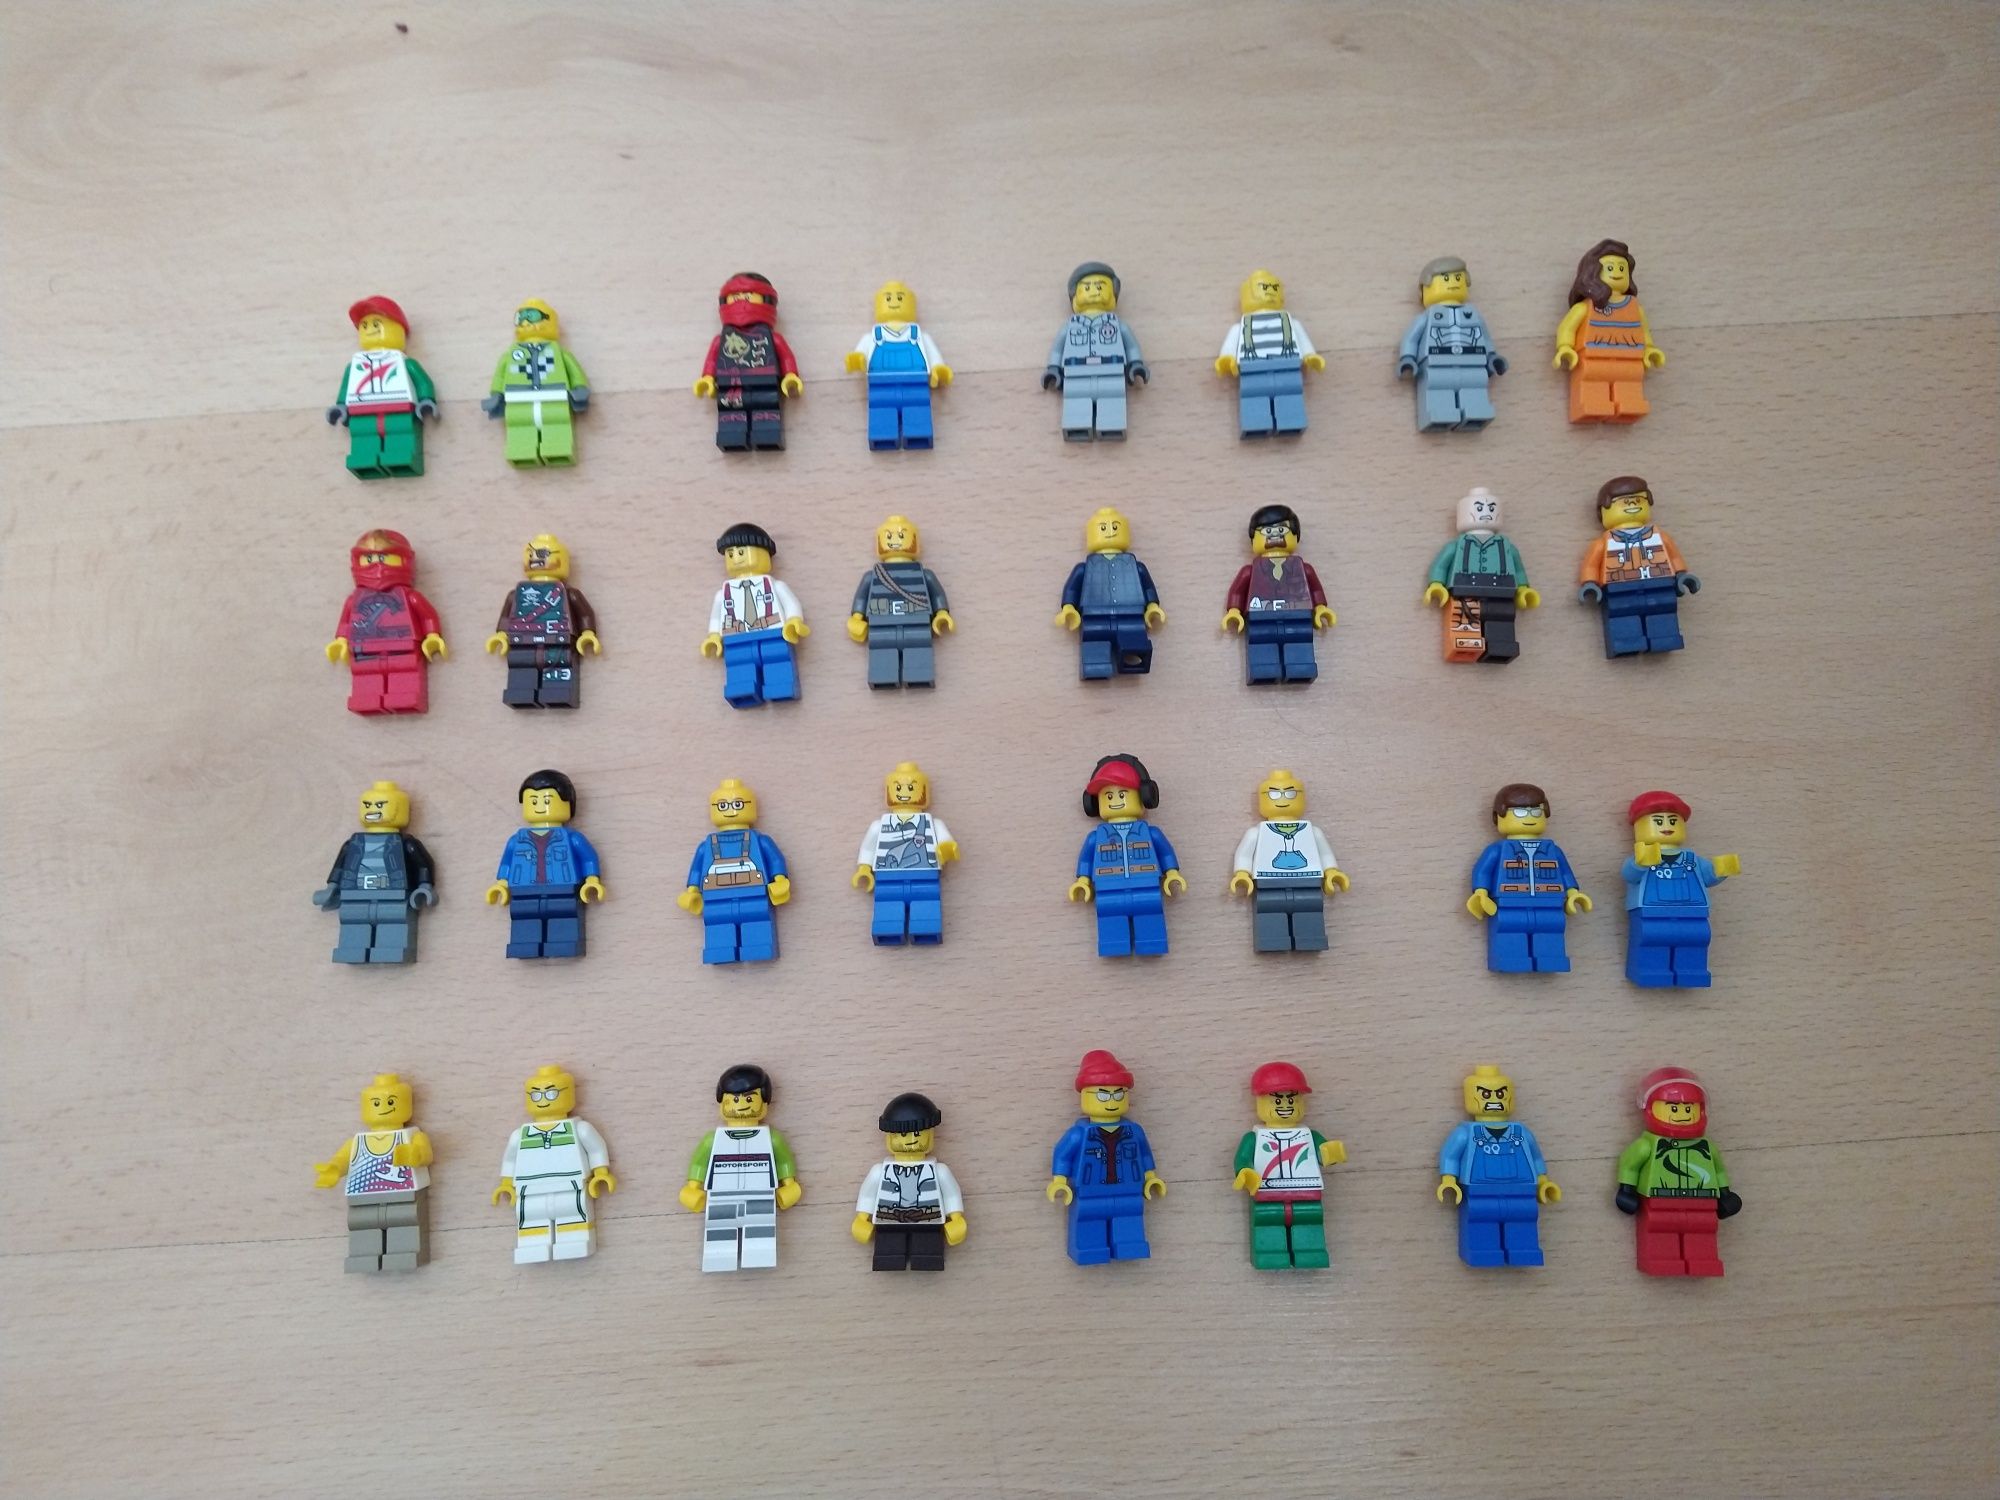 Caixa conjunto de minifiguras LEGO, acessórios diversos e motas